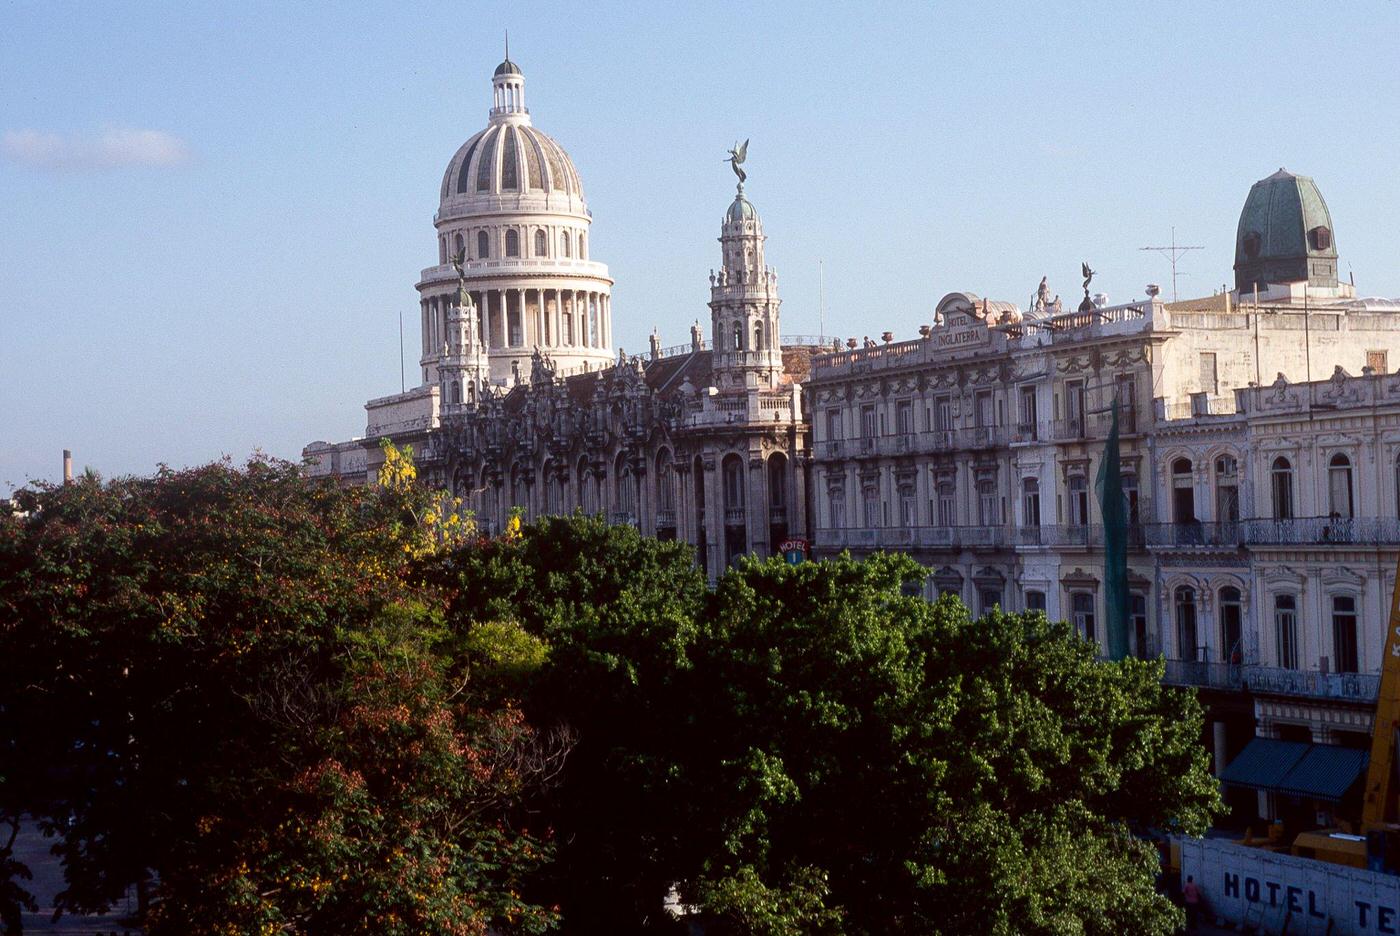 Hotel Inglaterra and the Capitol building in Havana, Cuba, June 1999.